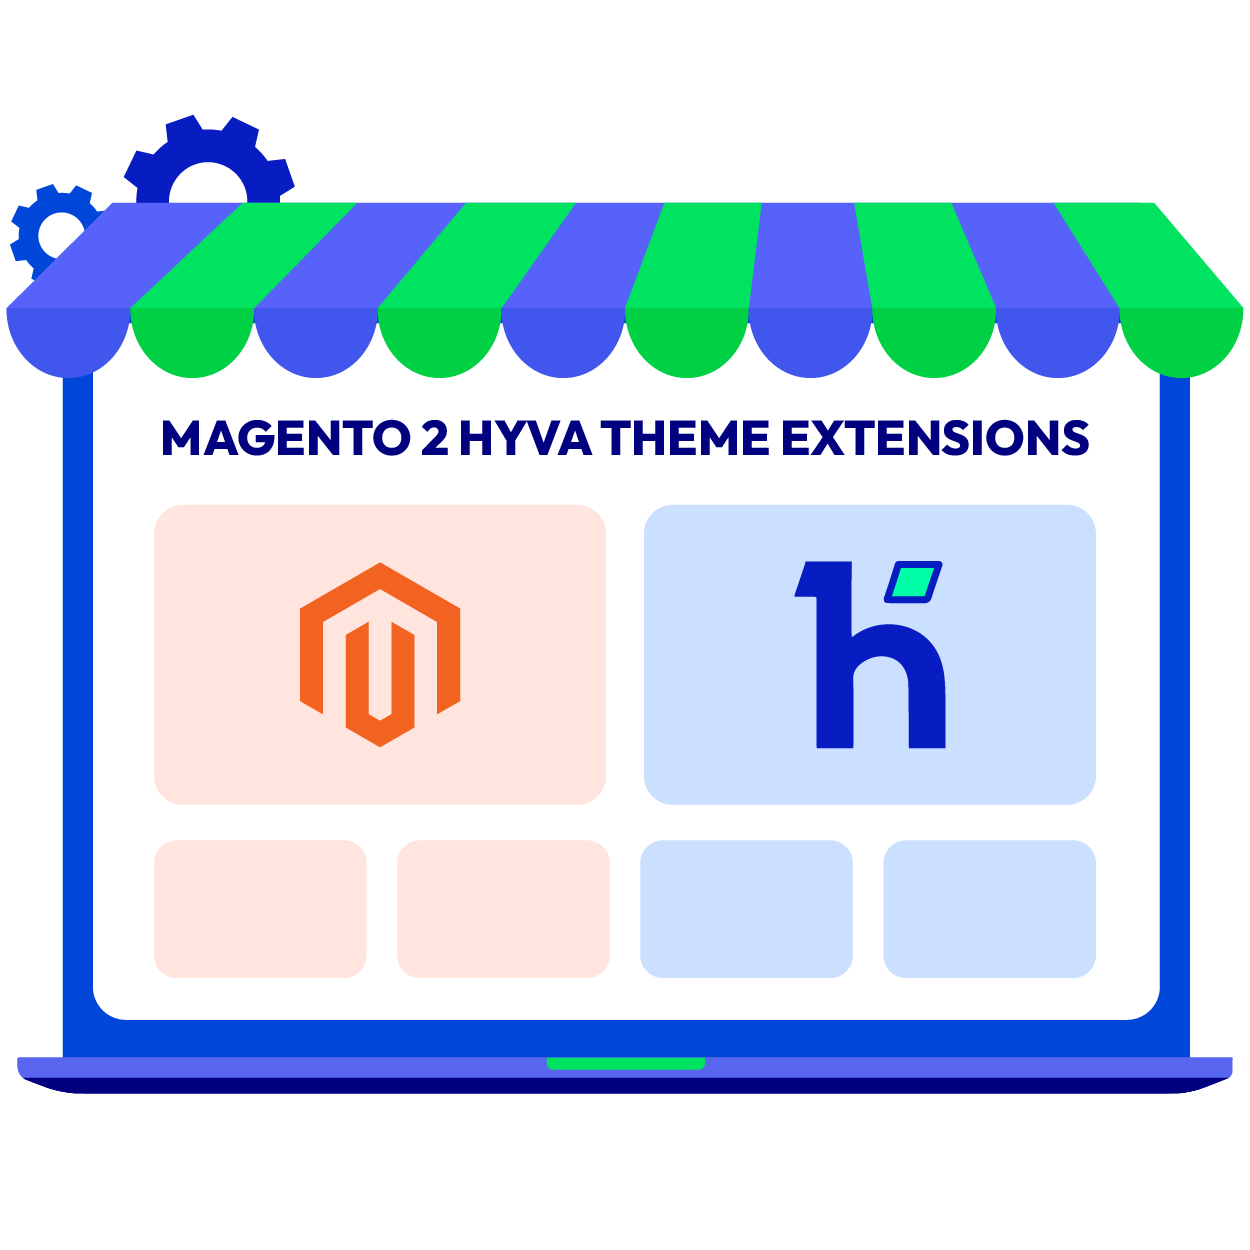 Magento 2 Hyva Theme Extensions